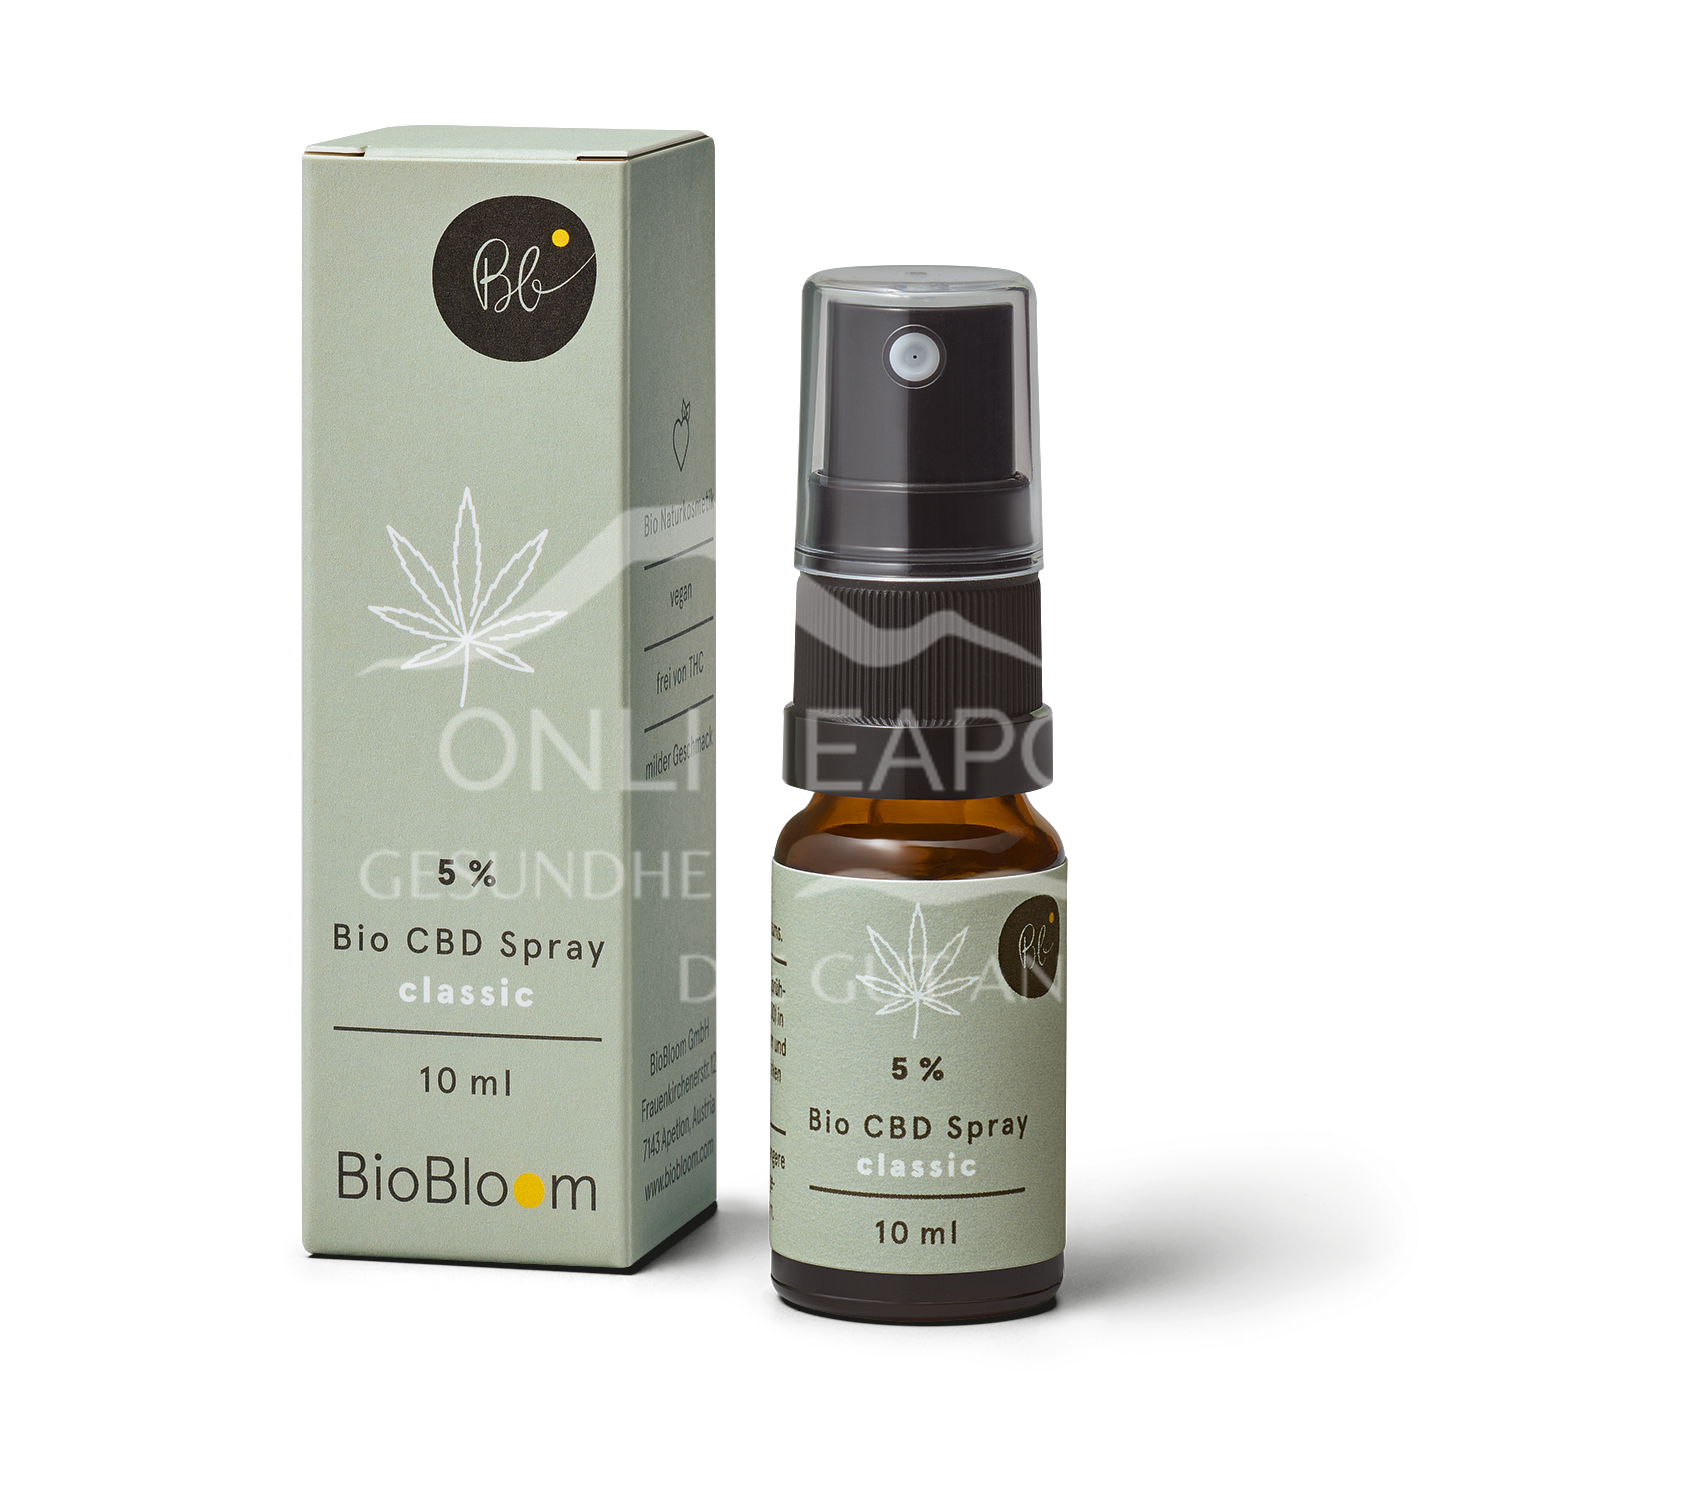 BioBloom classic 5% Bio CBD Spray